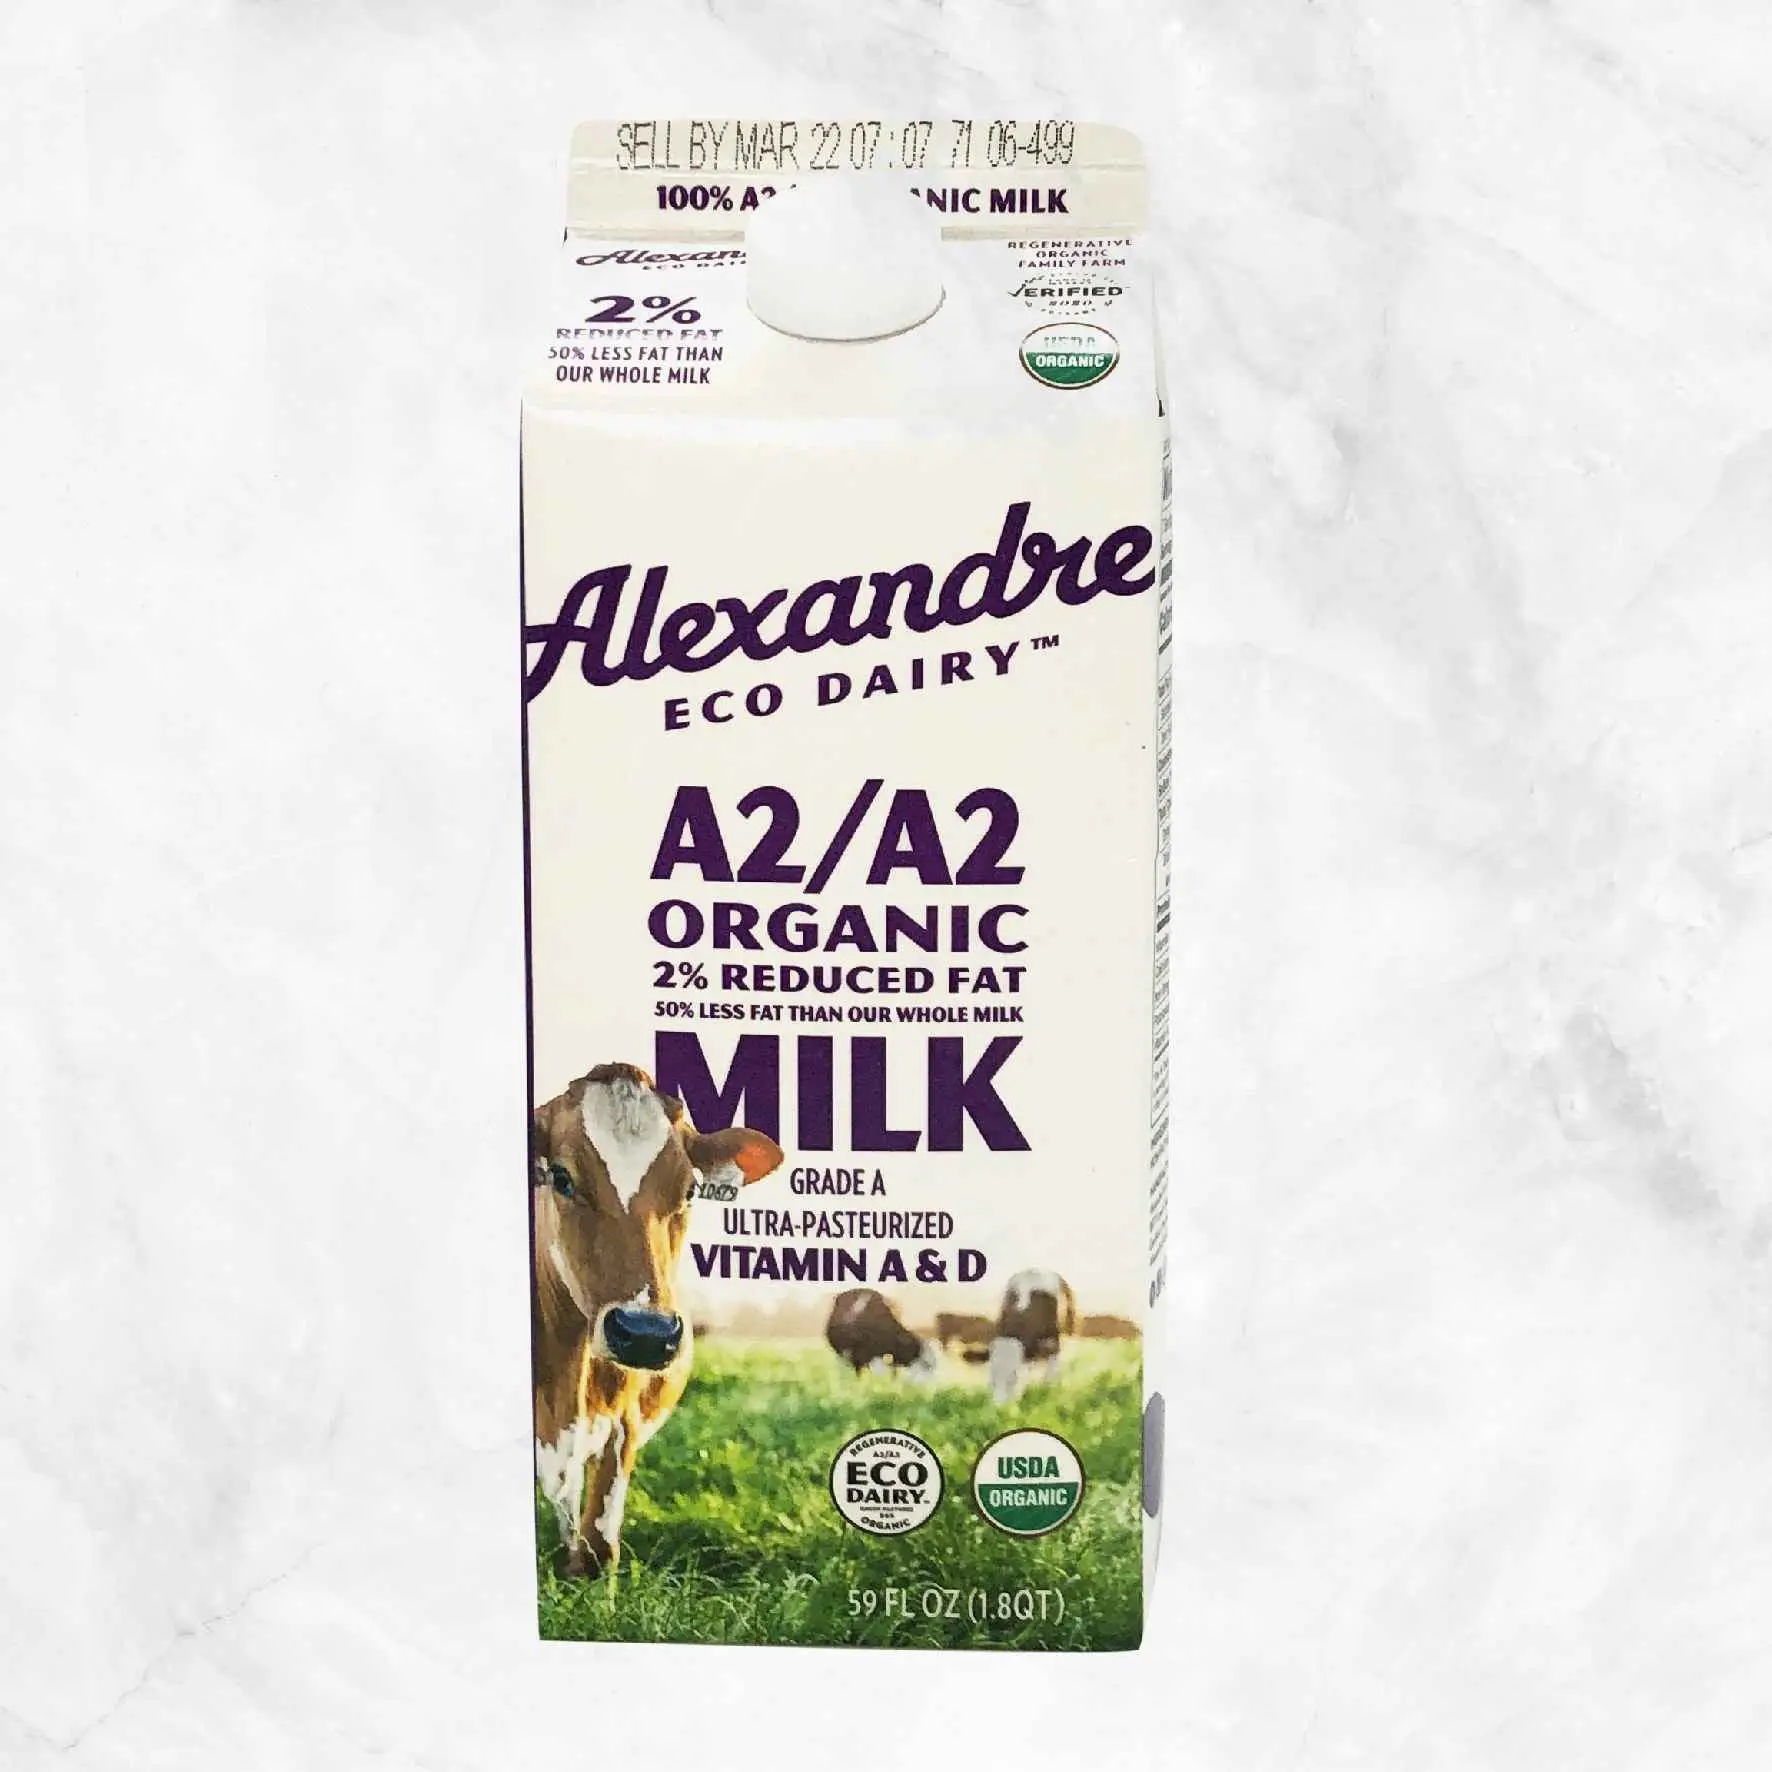 2% Reduced Fat A2/A2 Regenerative UHT Organic Milk Delivery